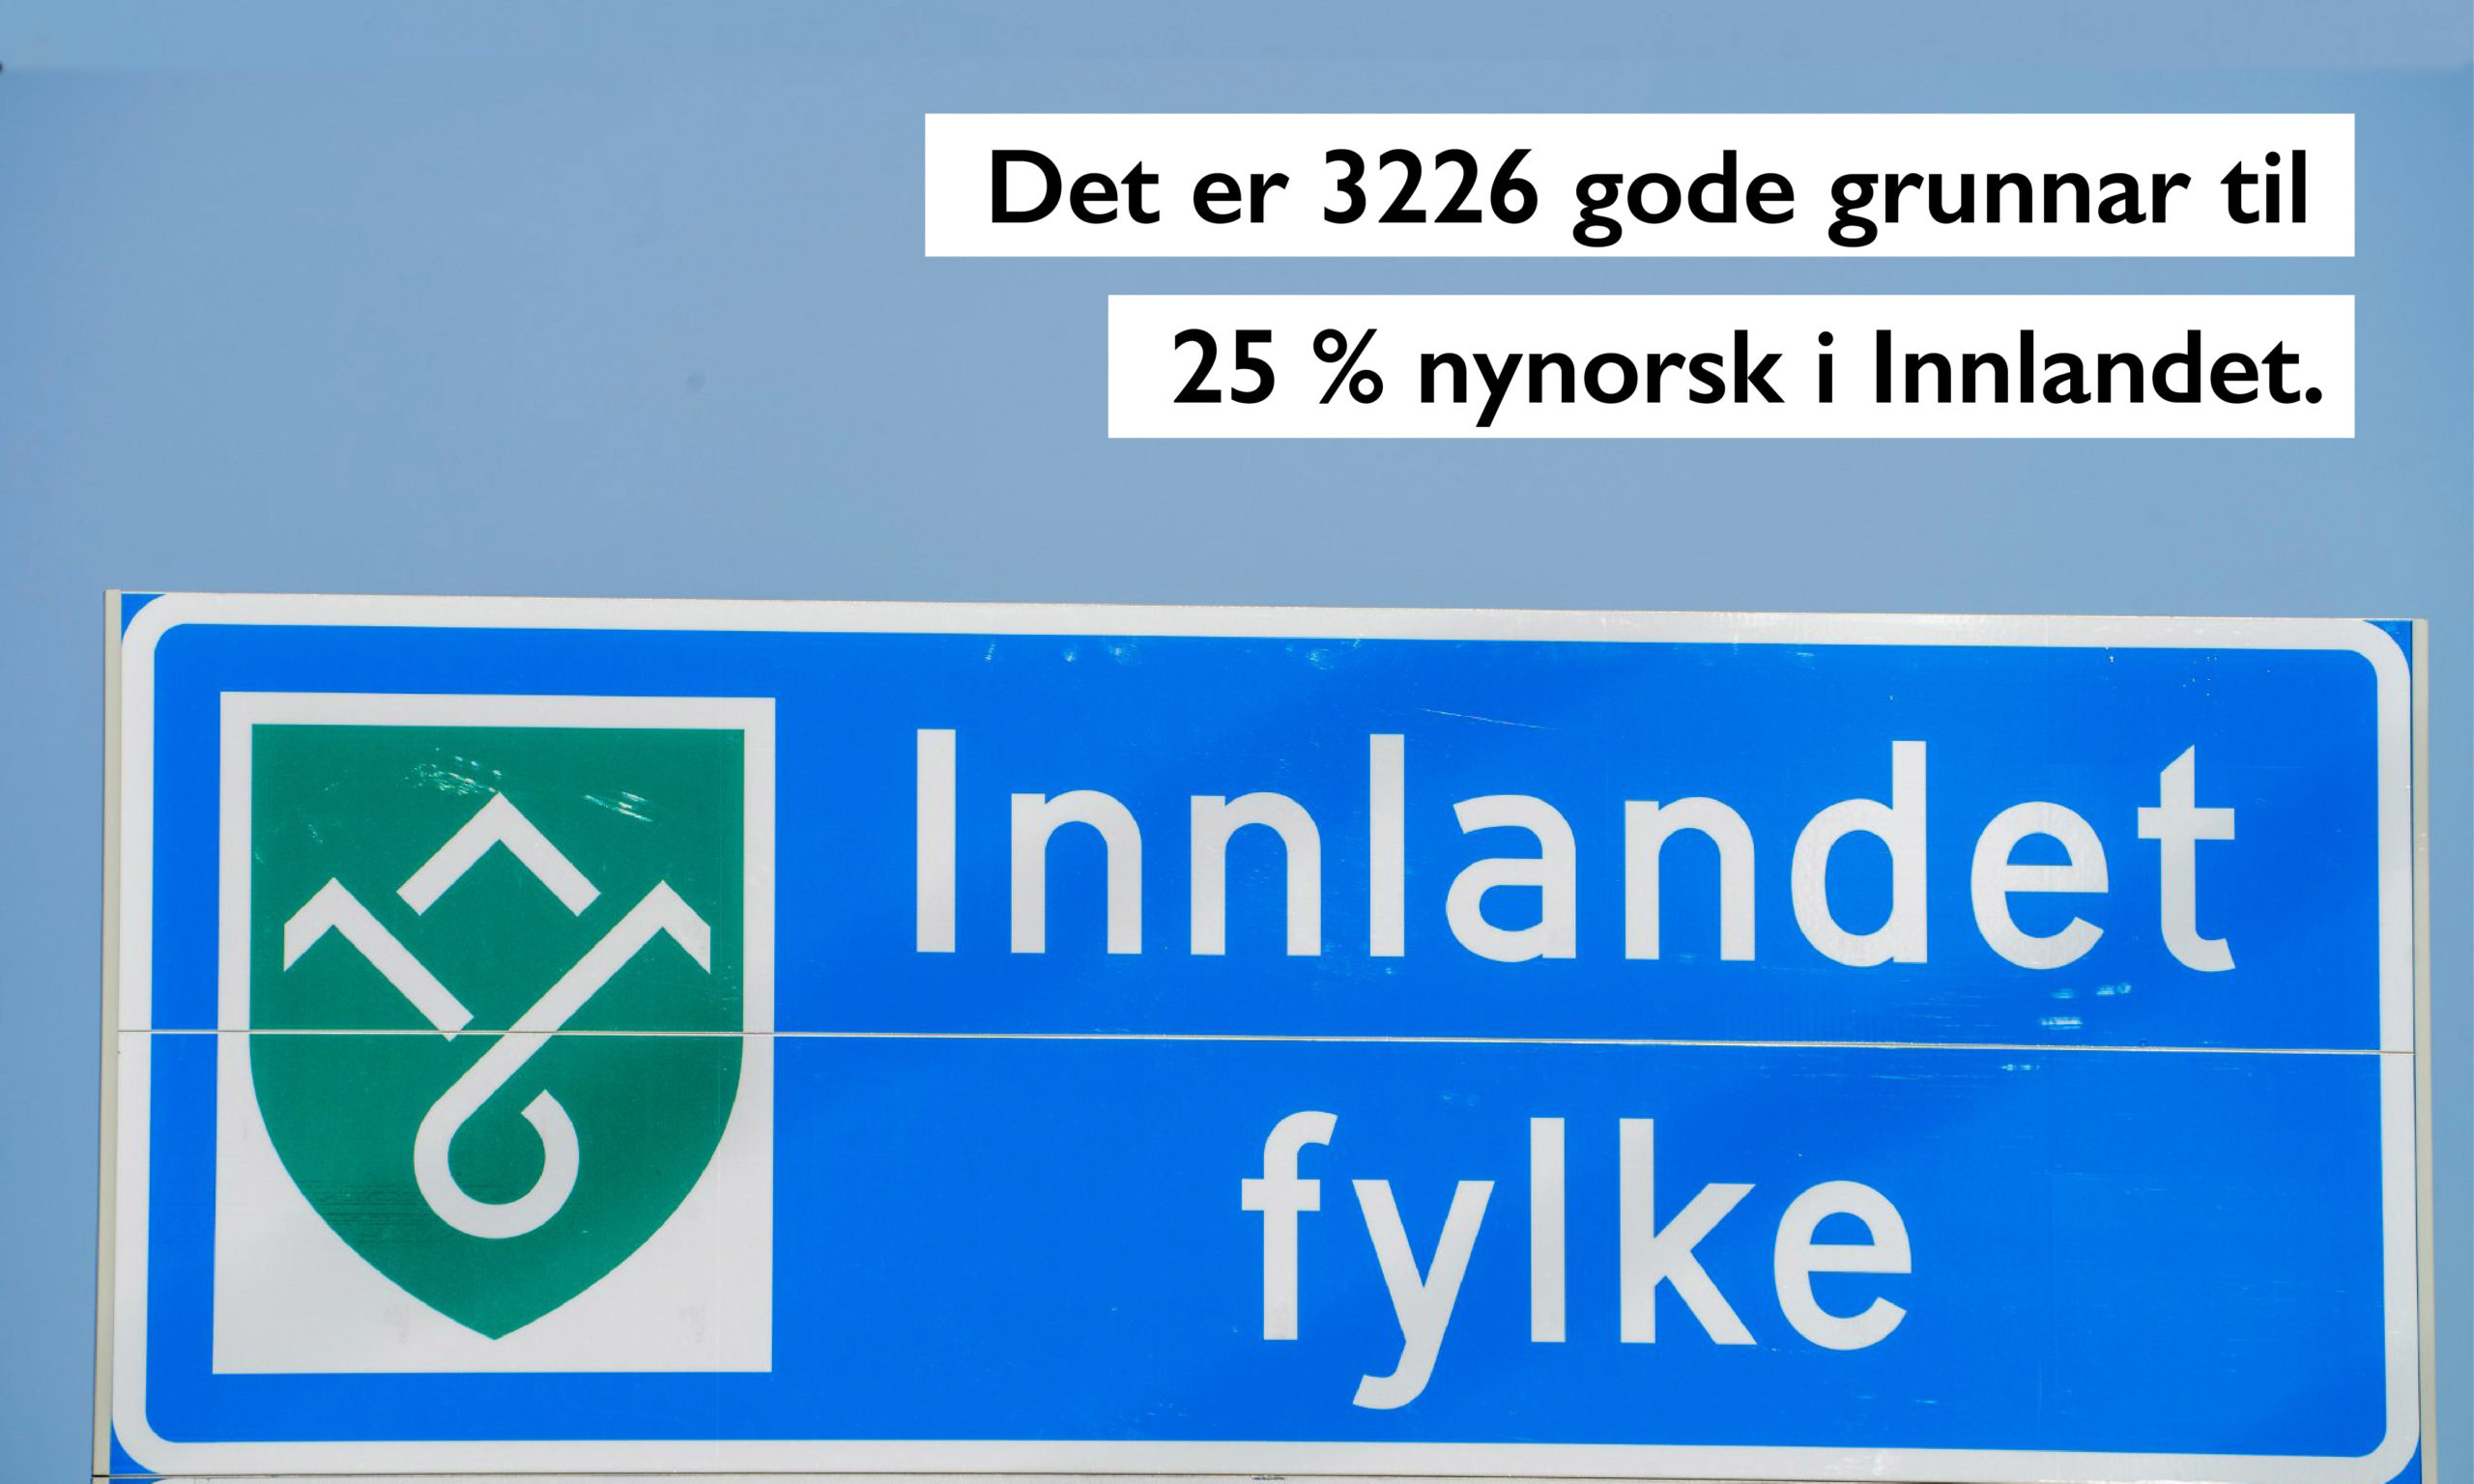 3226  gode  grunnar  for  nynorsk  i  Innlandet